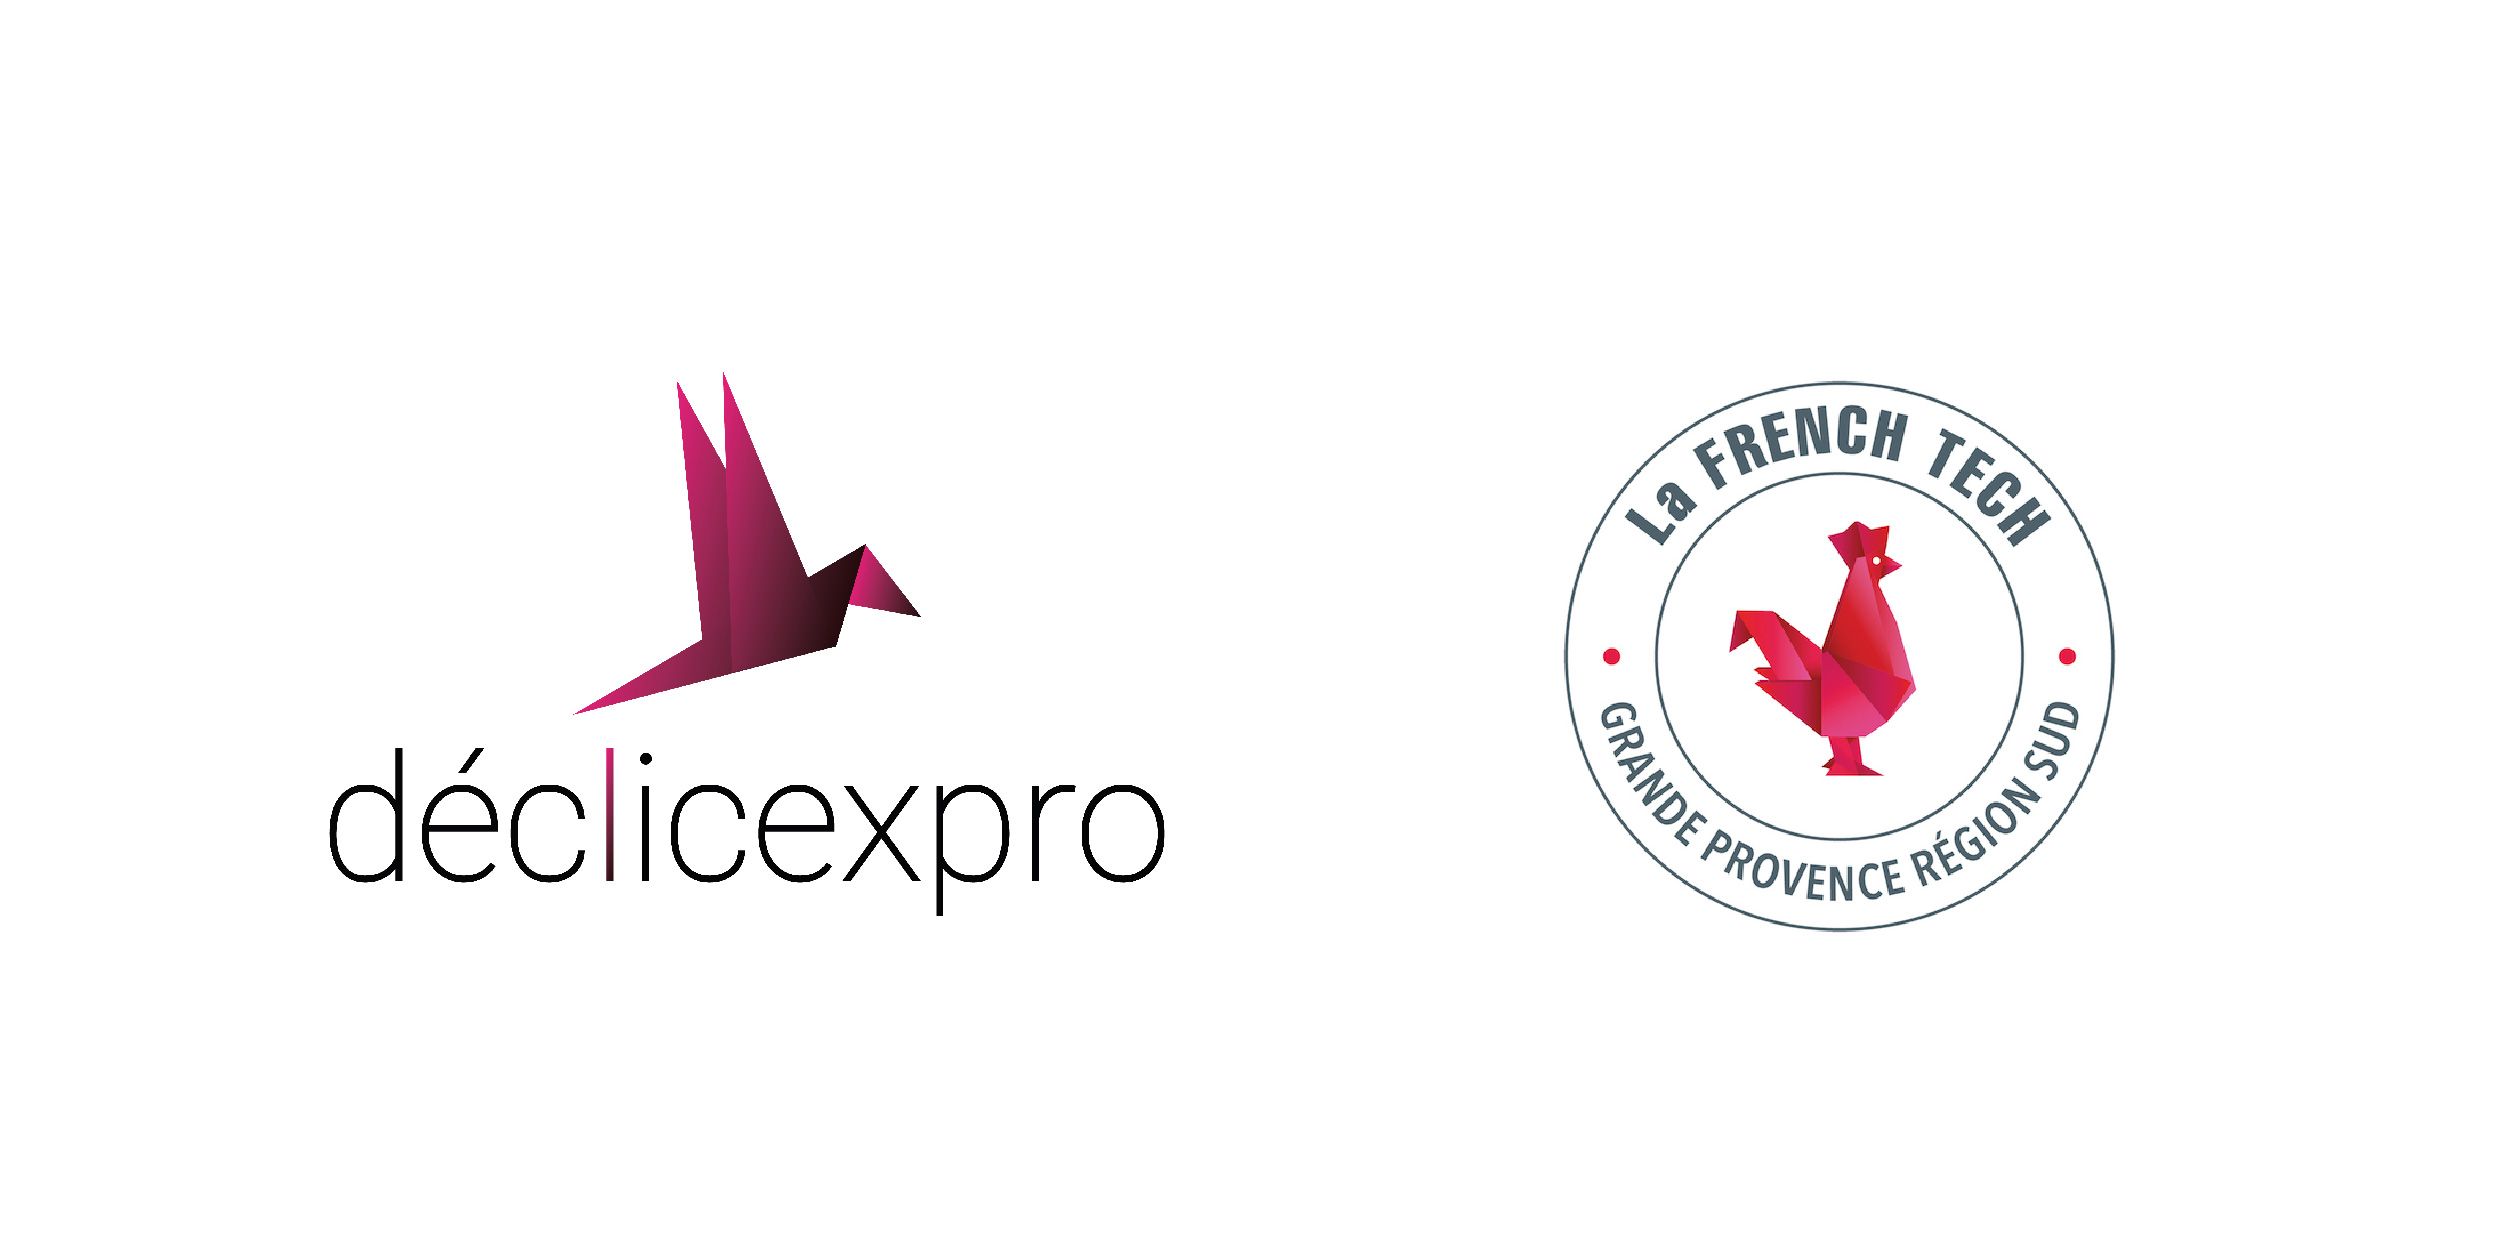 La French Tech x Declicexpro agence de communication - logo de la French Tech